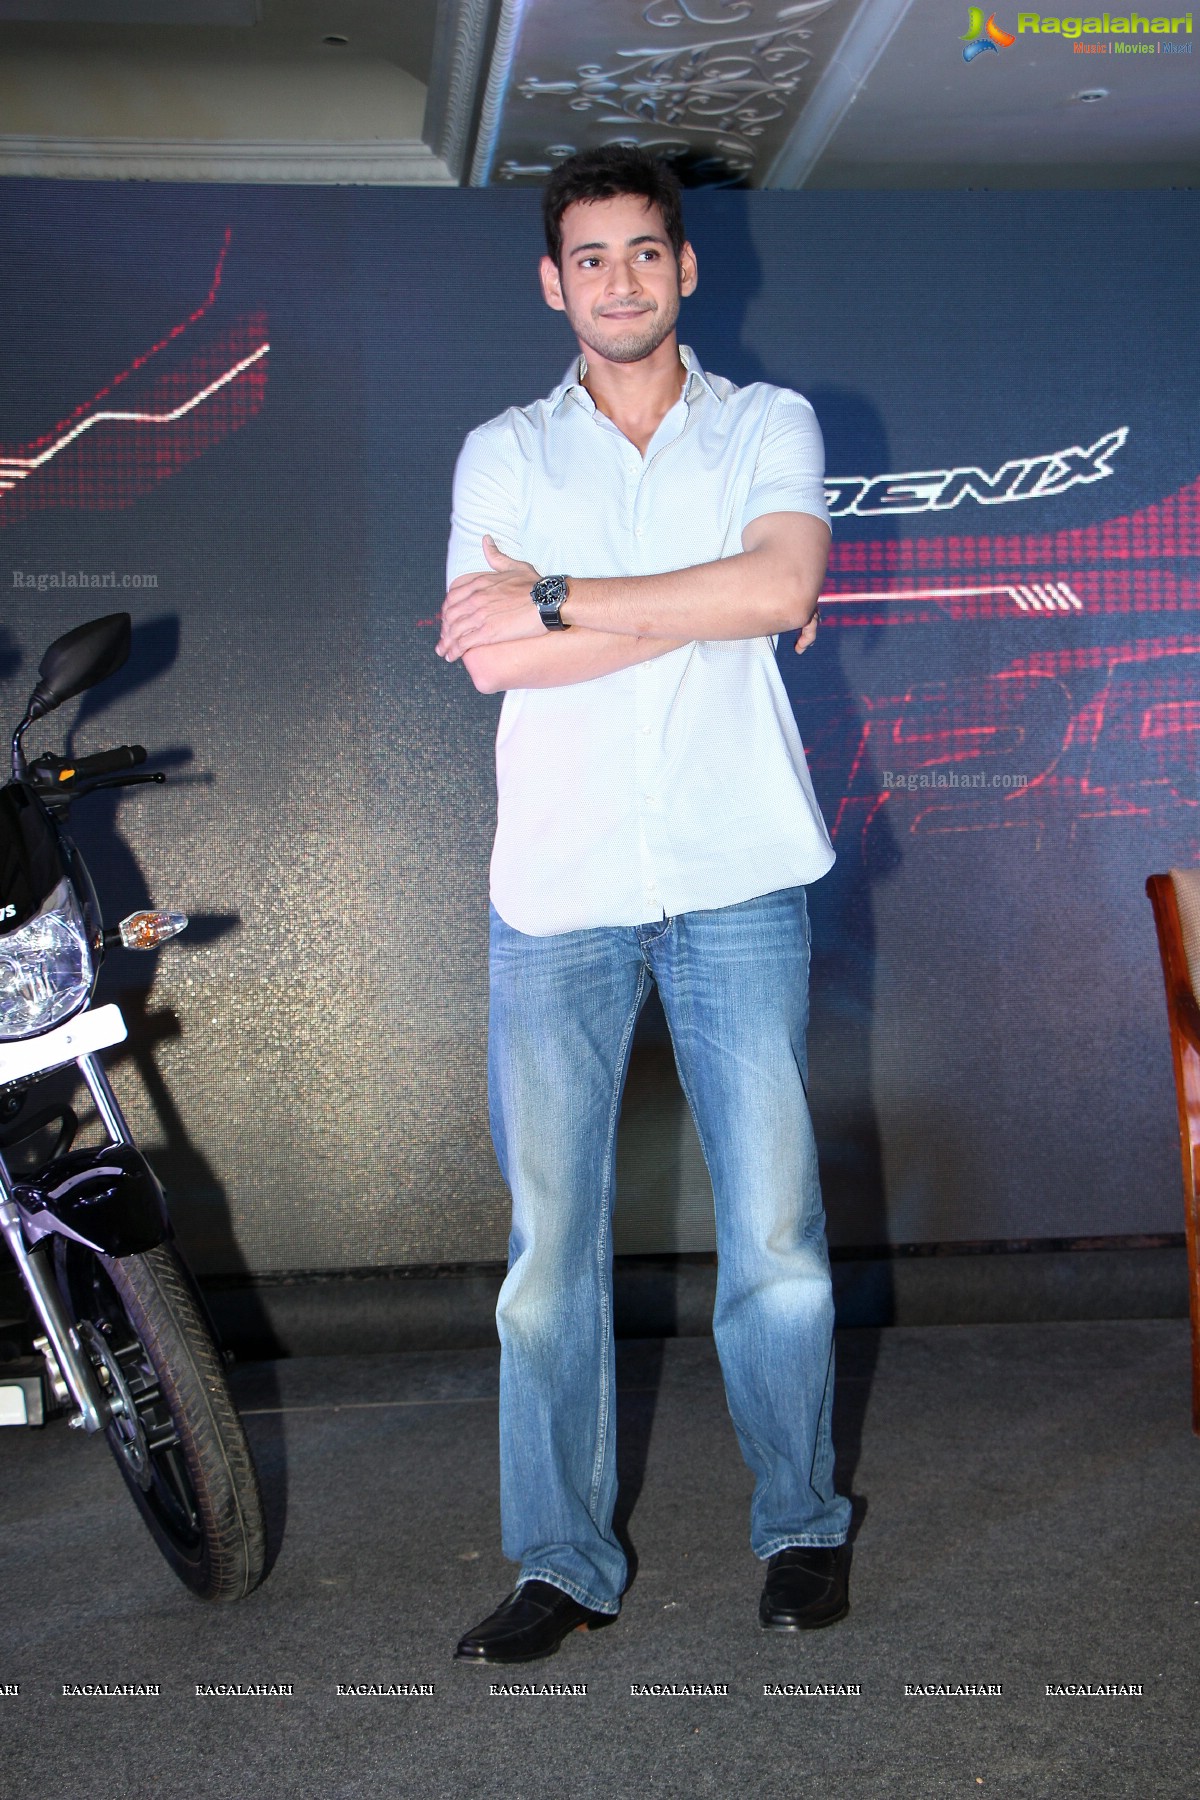 Mahesh Babu as Brand Ambassador for TVS Two Wheelers